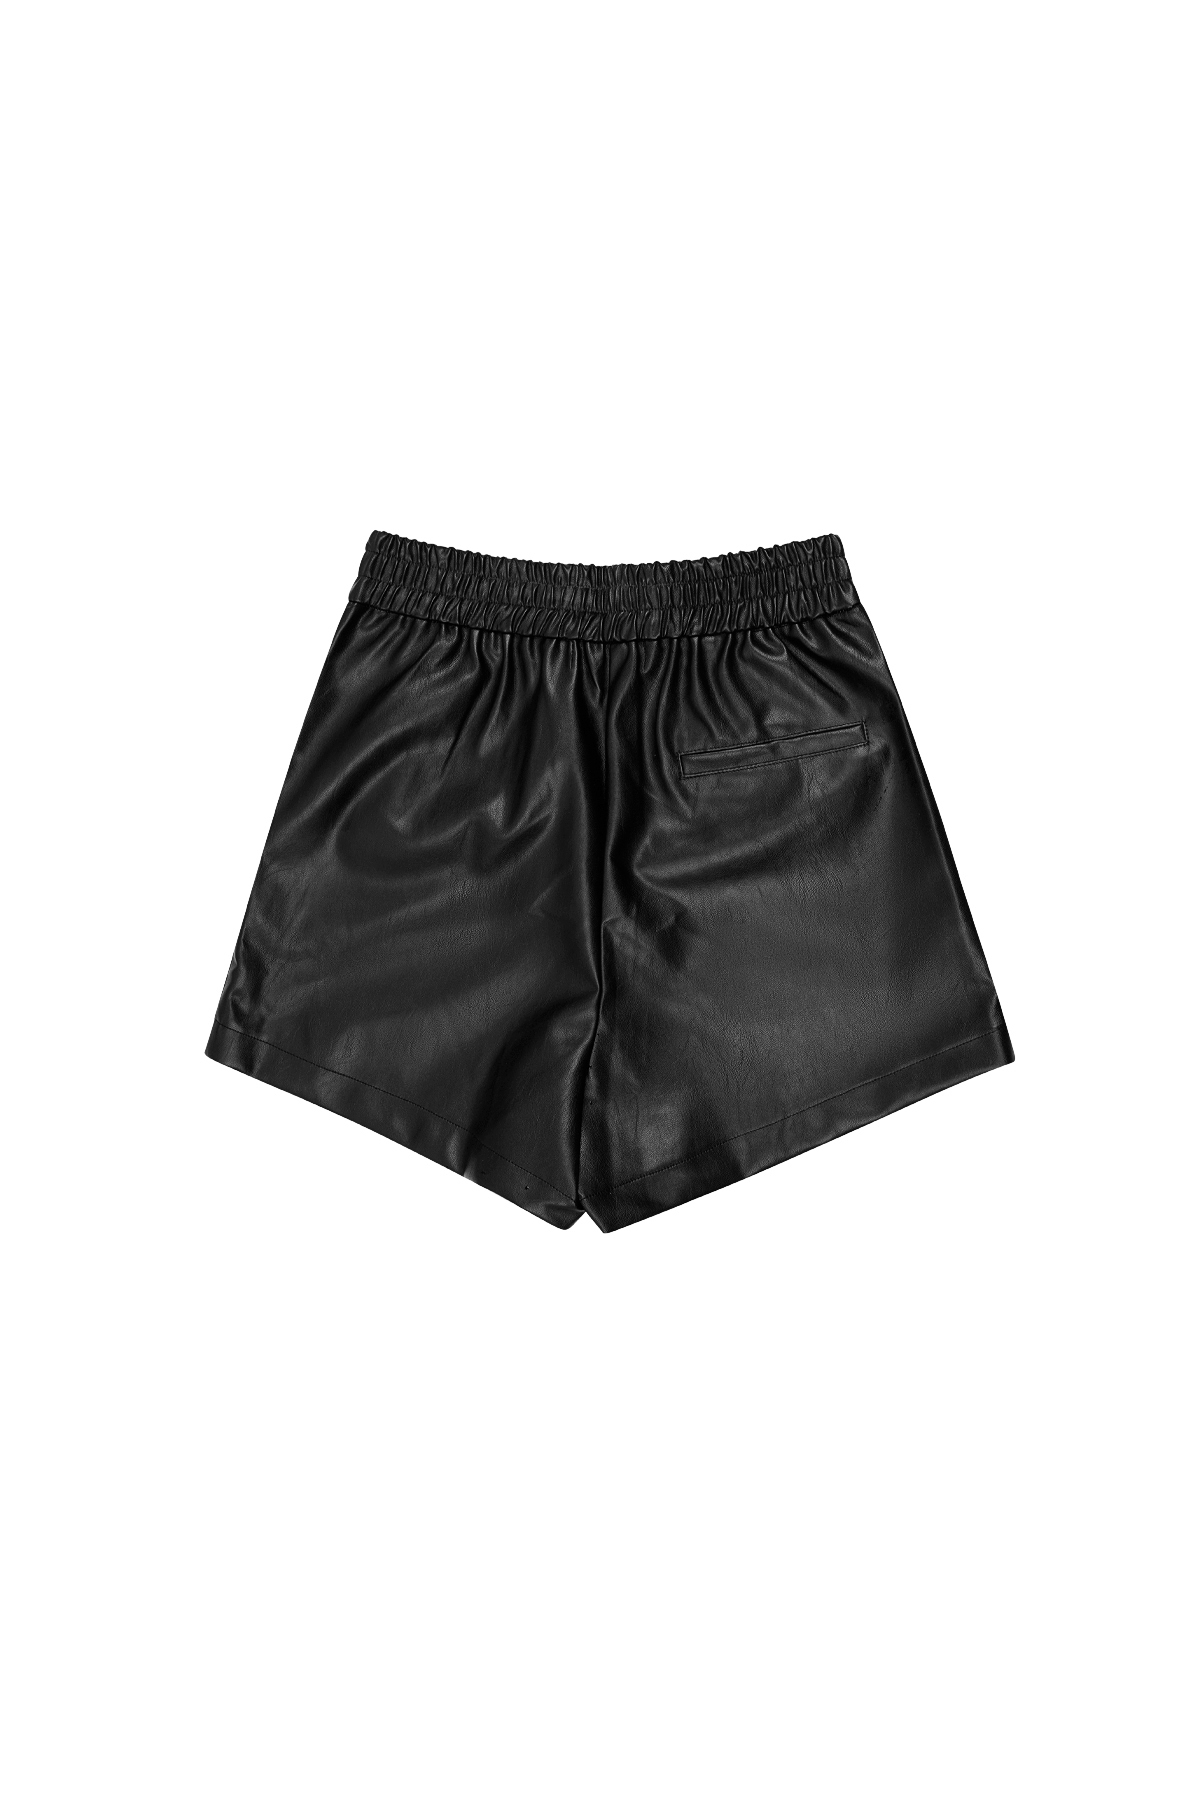 Shorts de cintura alta de cuero PU - negro h5 Imagen6